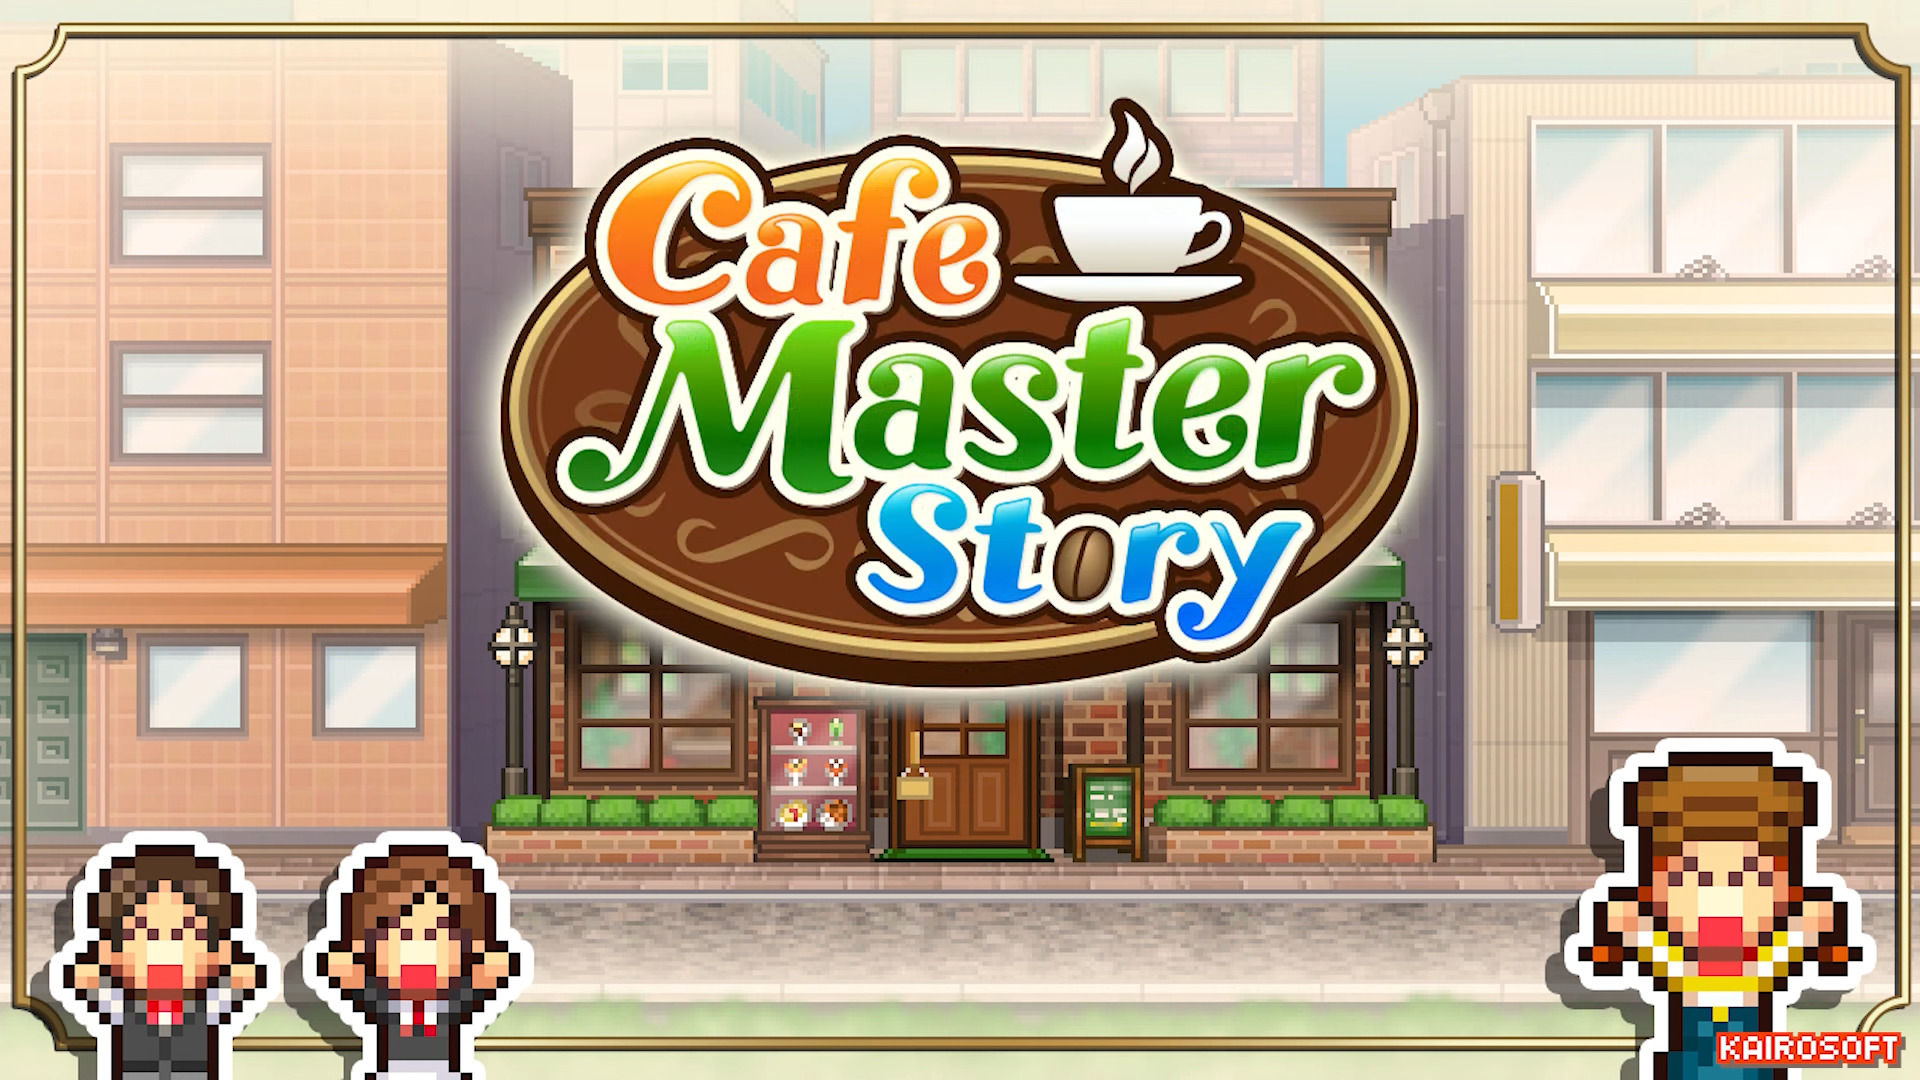 Download Cafe Master Story für Android kostenlos.